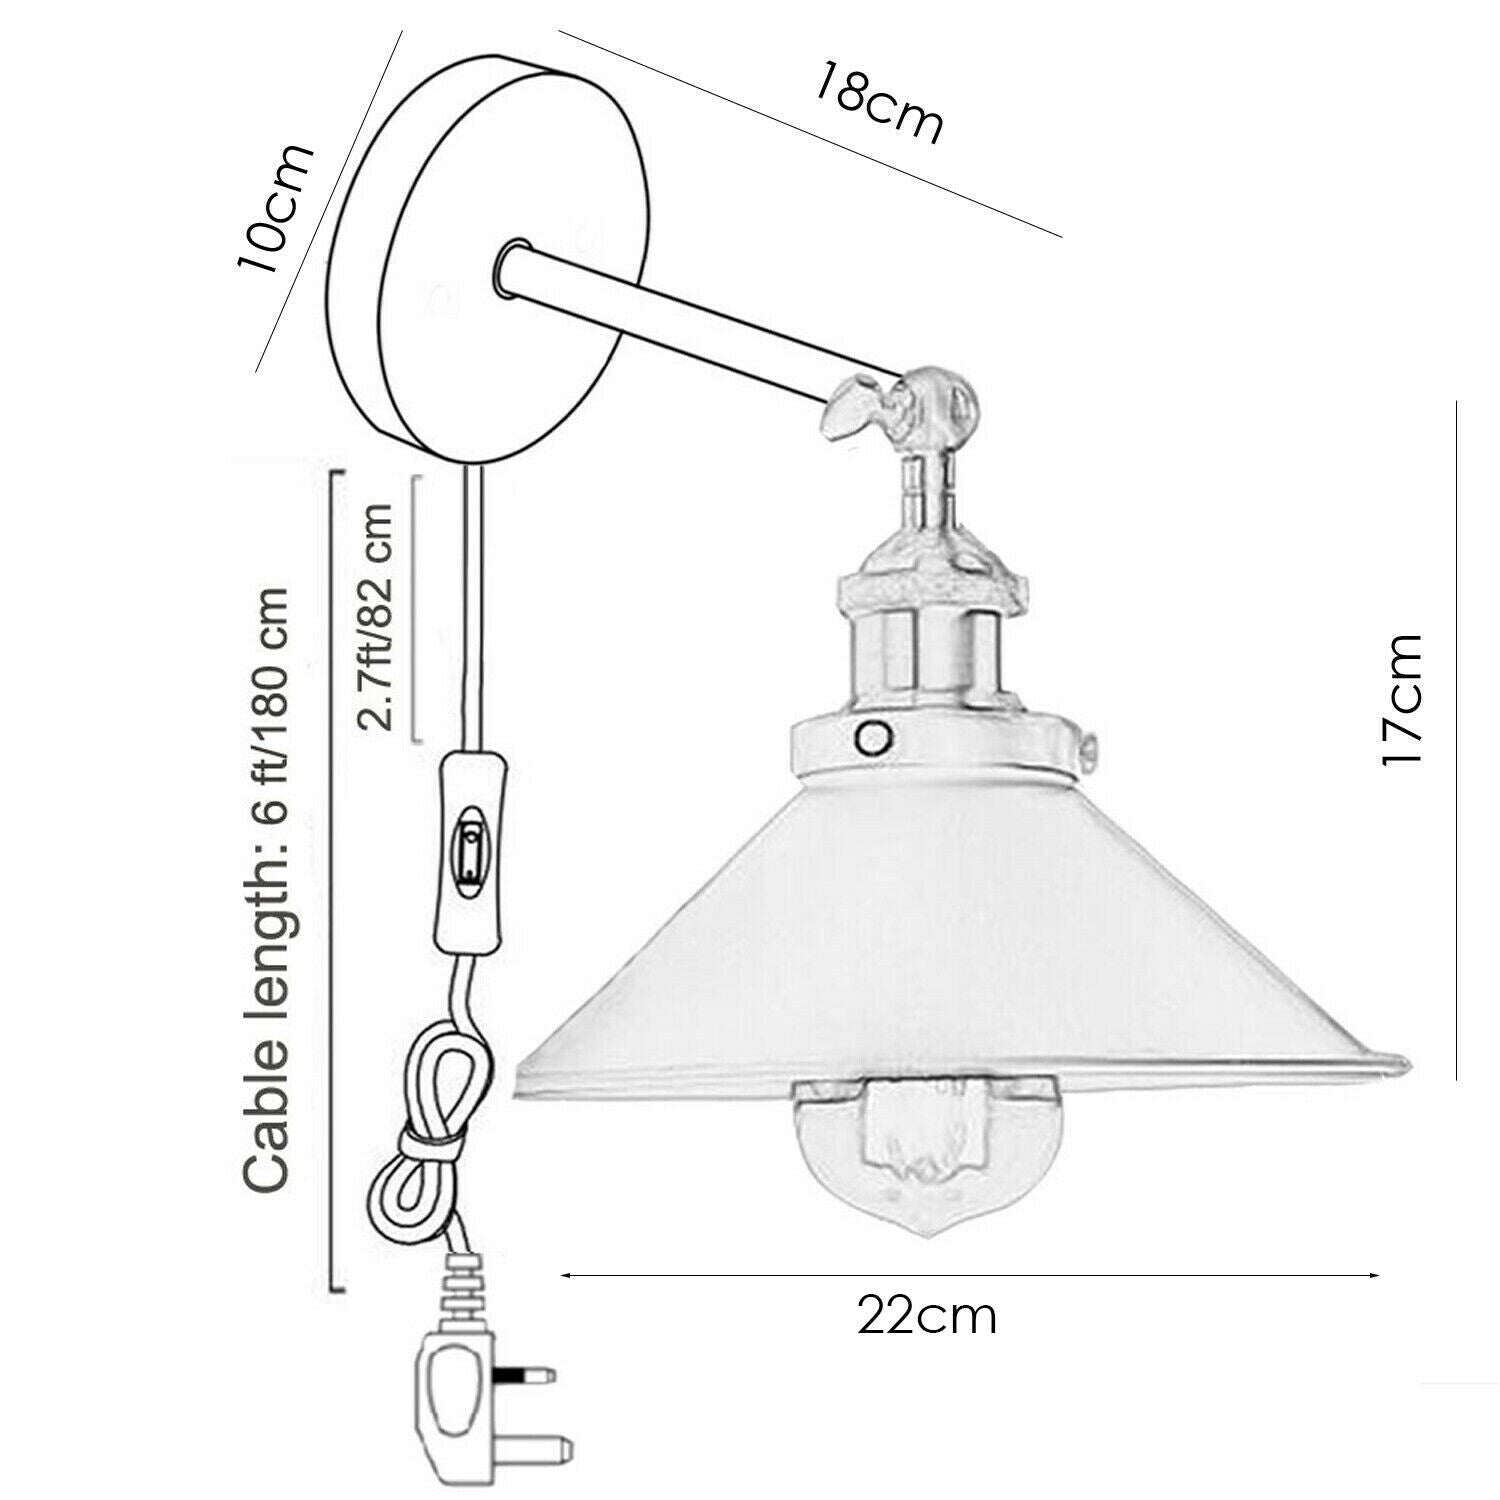 Vintage Retro Modern Plug In Wall Light Fitting Black Sconce Lamp shade fitting Shade Wall Light UK~2273 - LEDSone UK Ltd